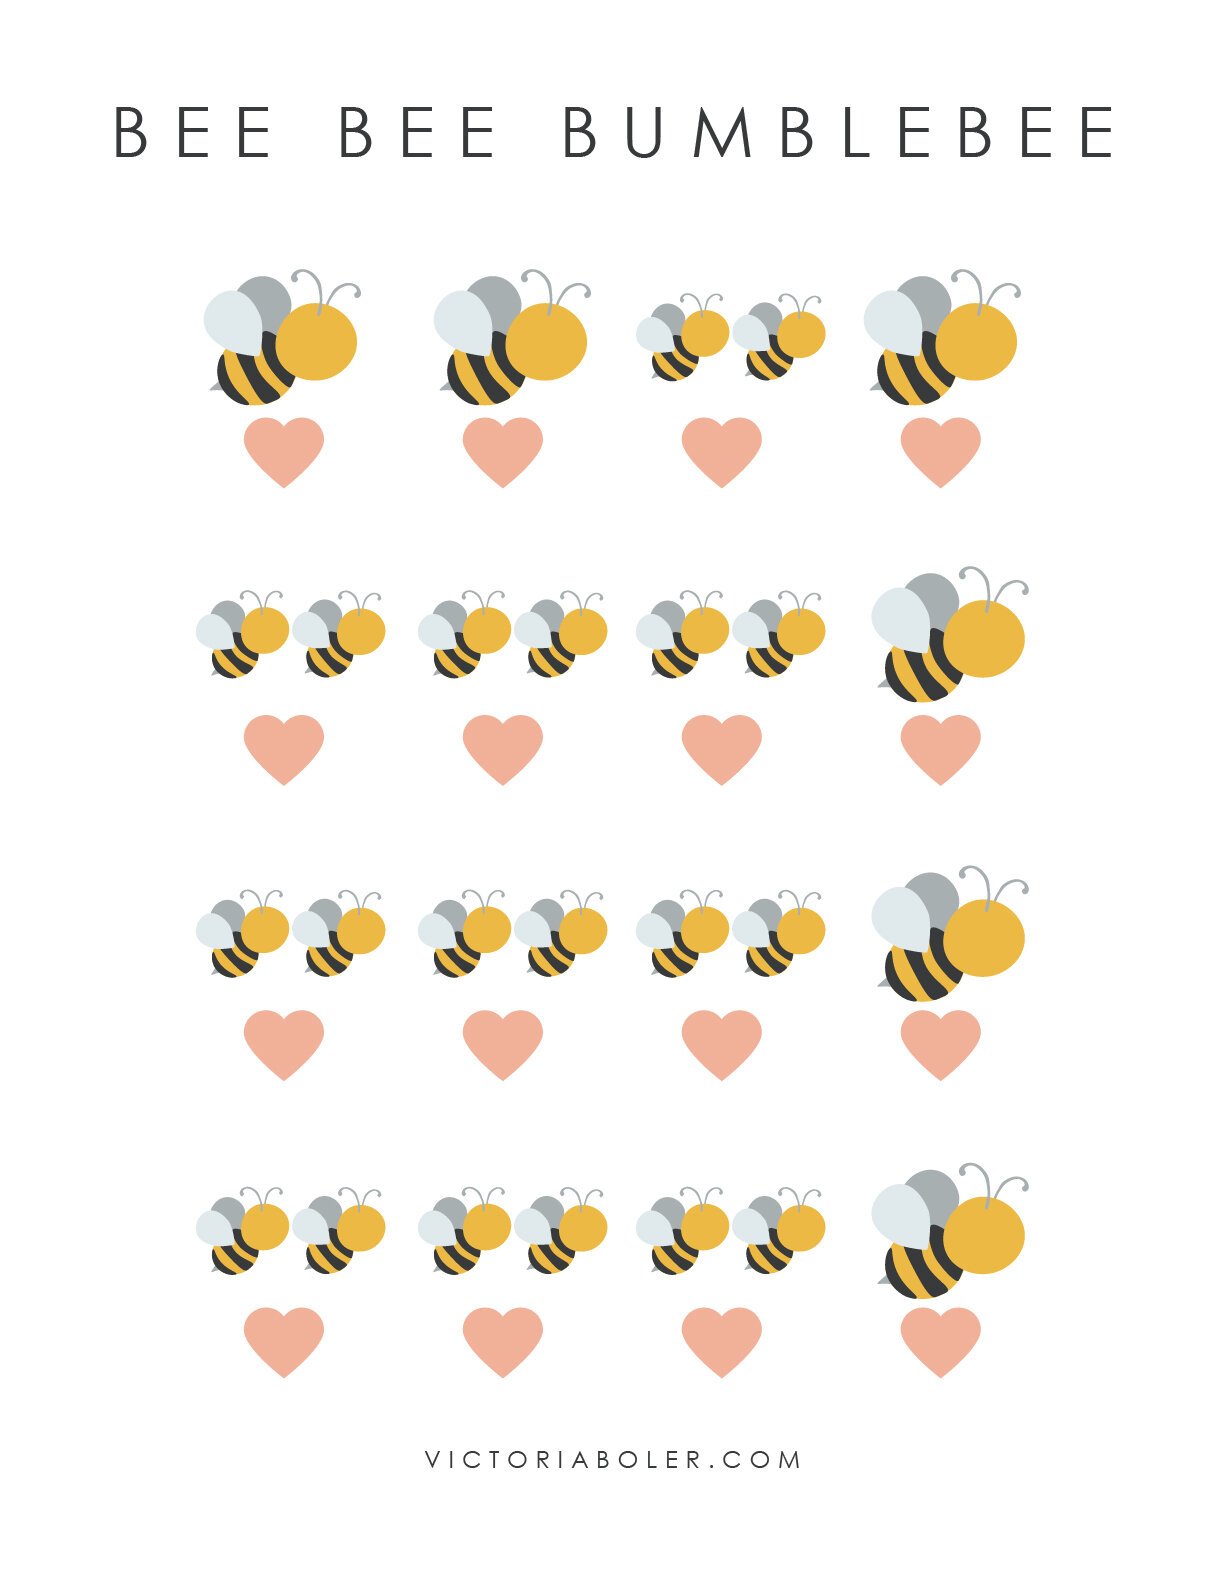 Bee Bee Bumblebee 3ldpi.jpg